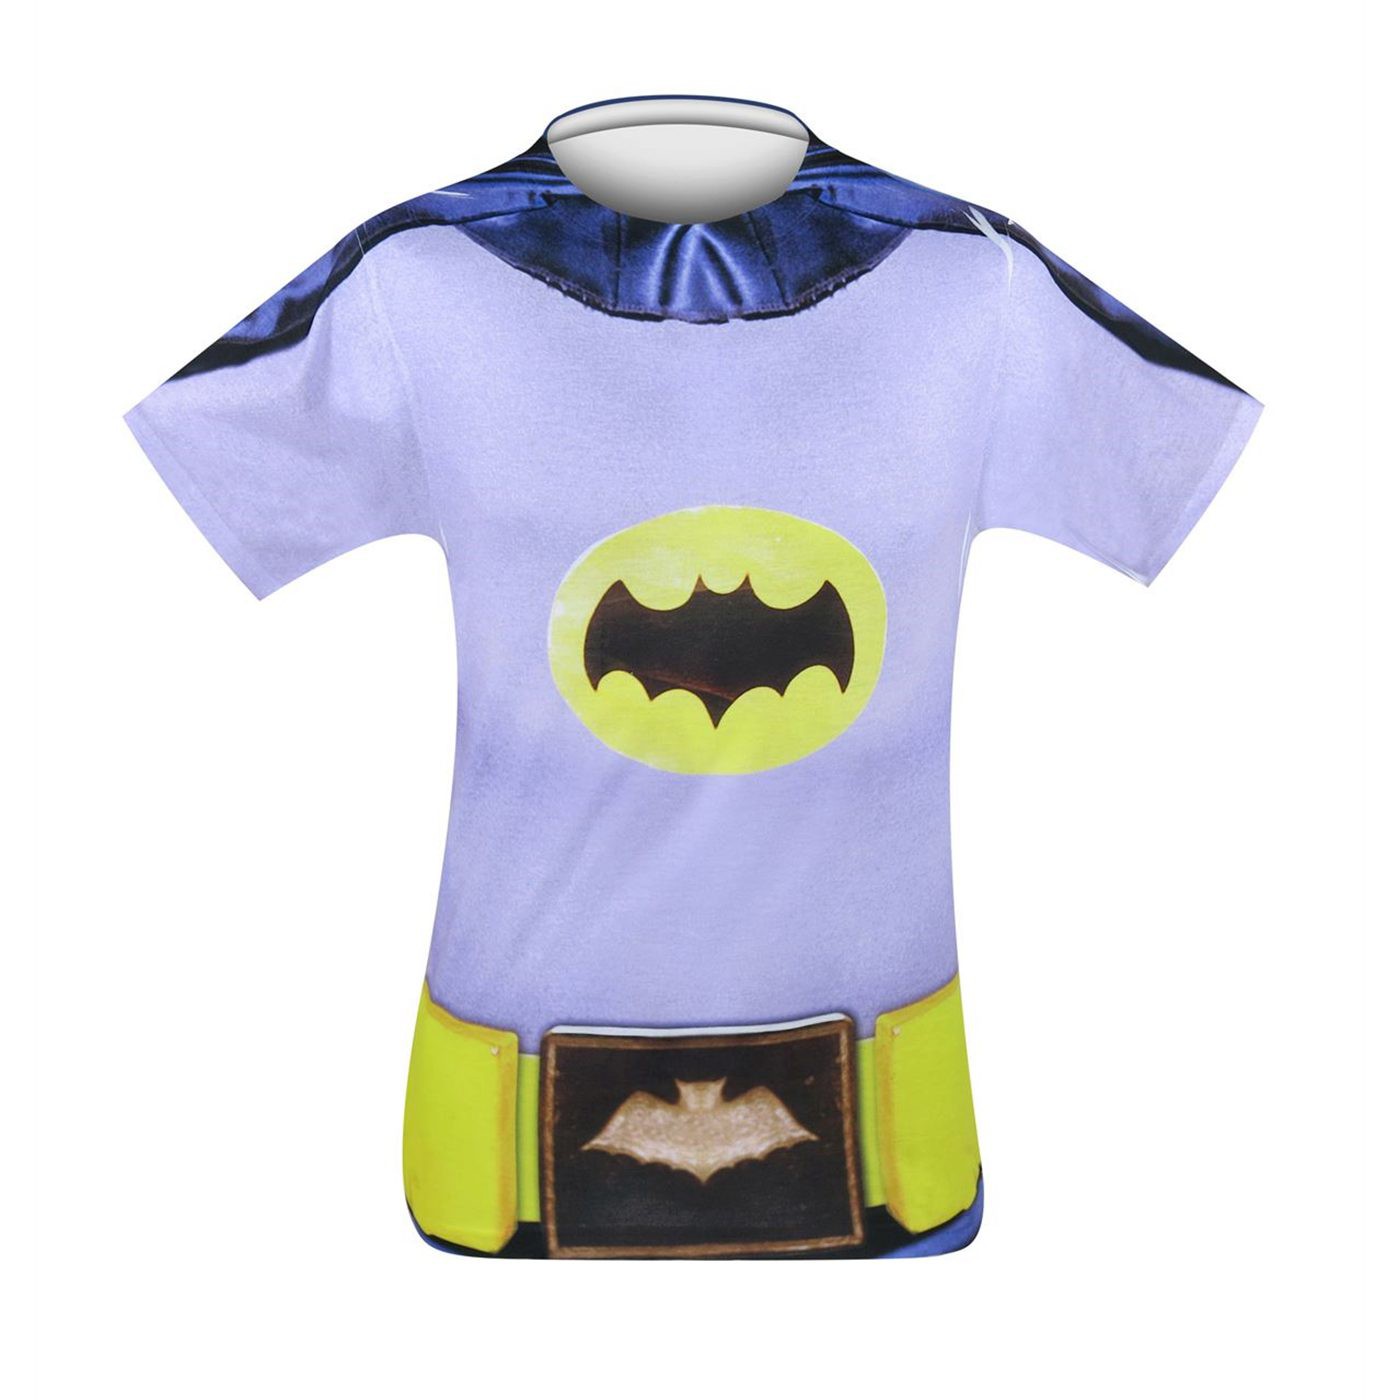 Adam West Batman Costume T-Shirt